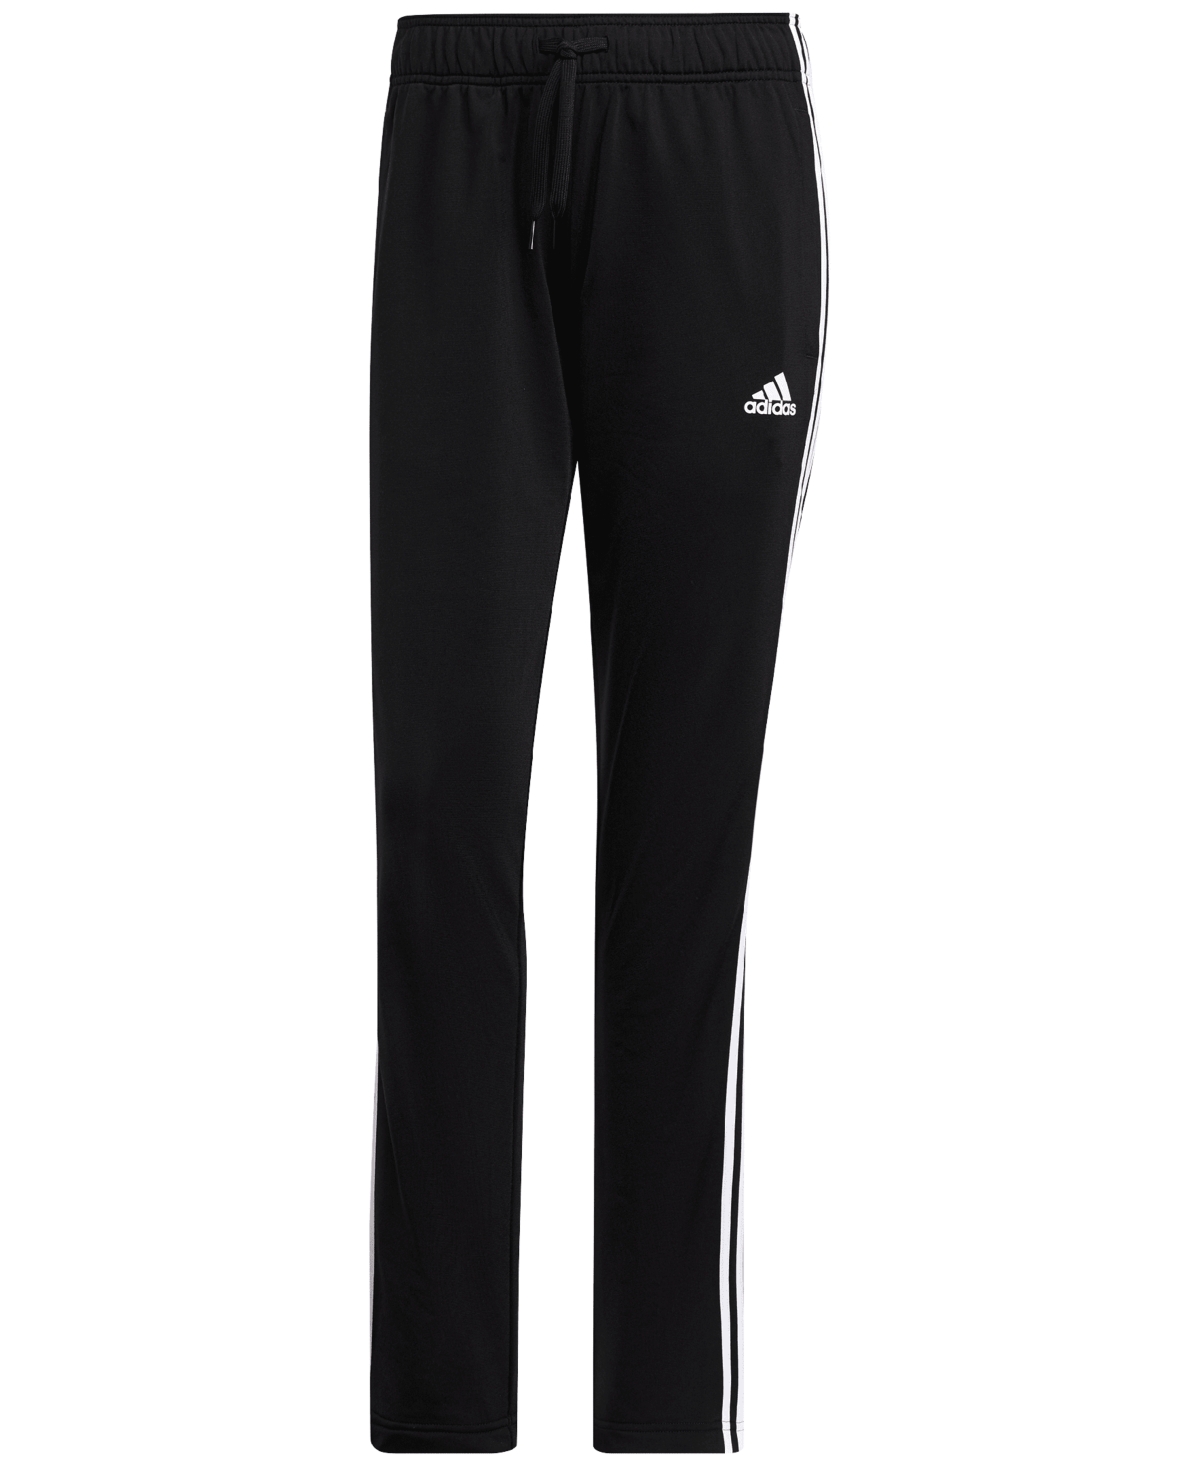 Women's Essentials Warm-Up Slim Tapered 3-Stripes Track Pants - Black